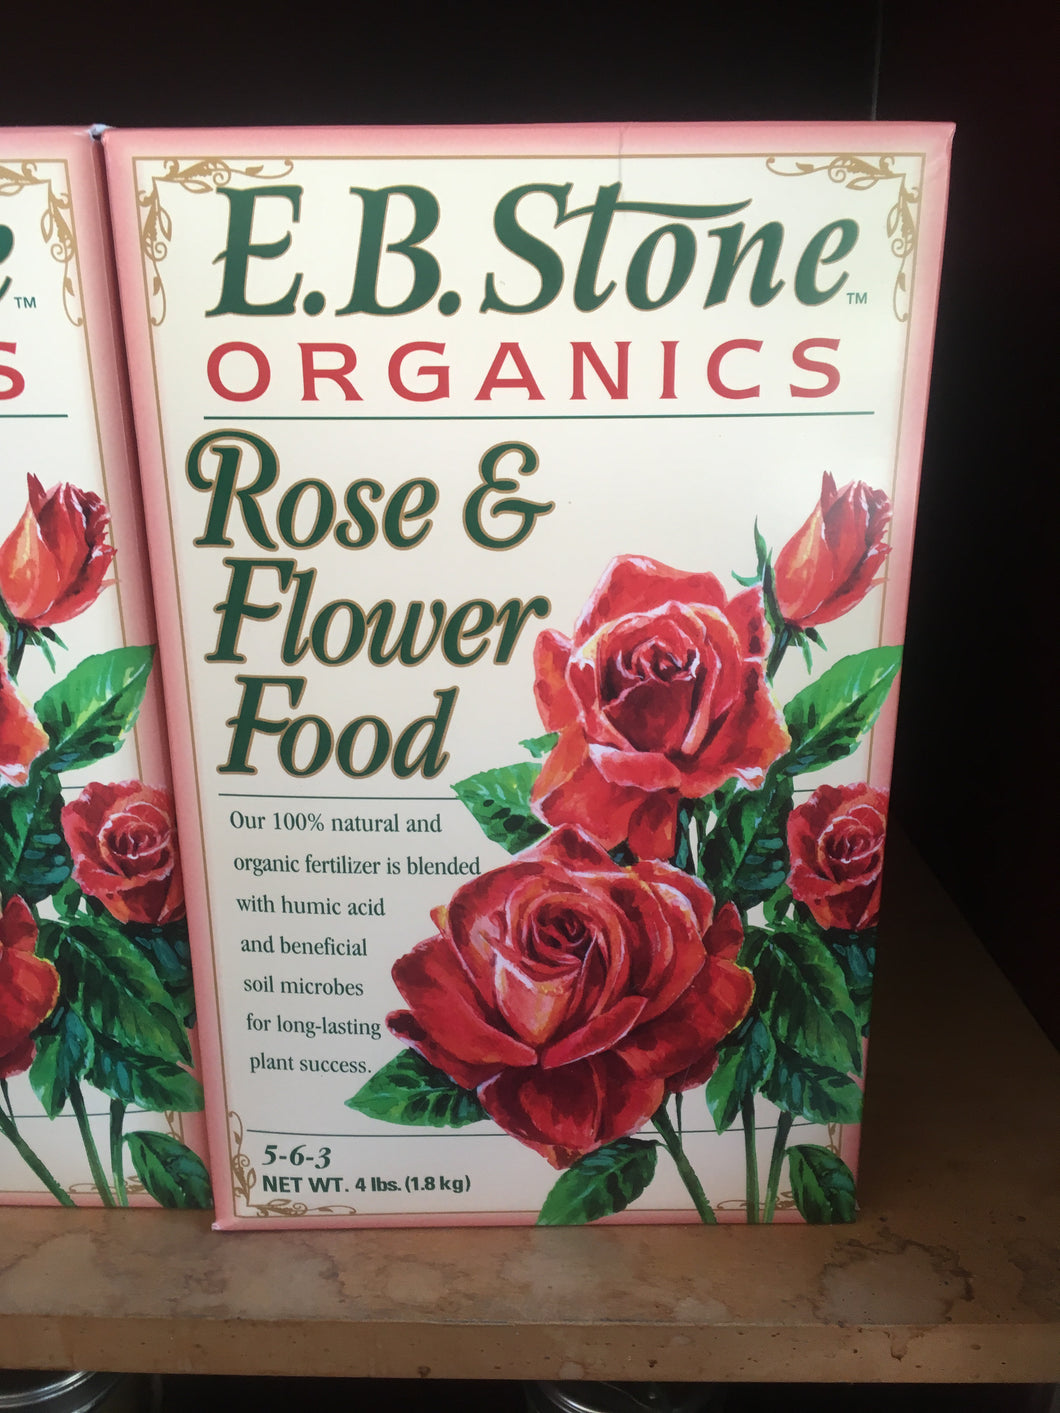 E.B. Stone Organics Rose & Flower Food